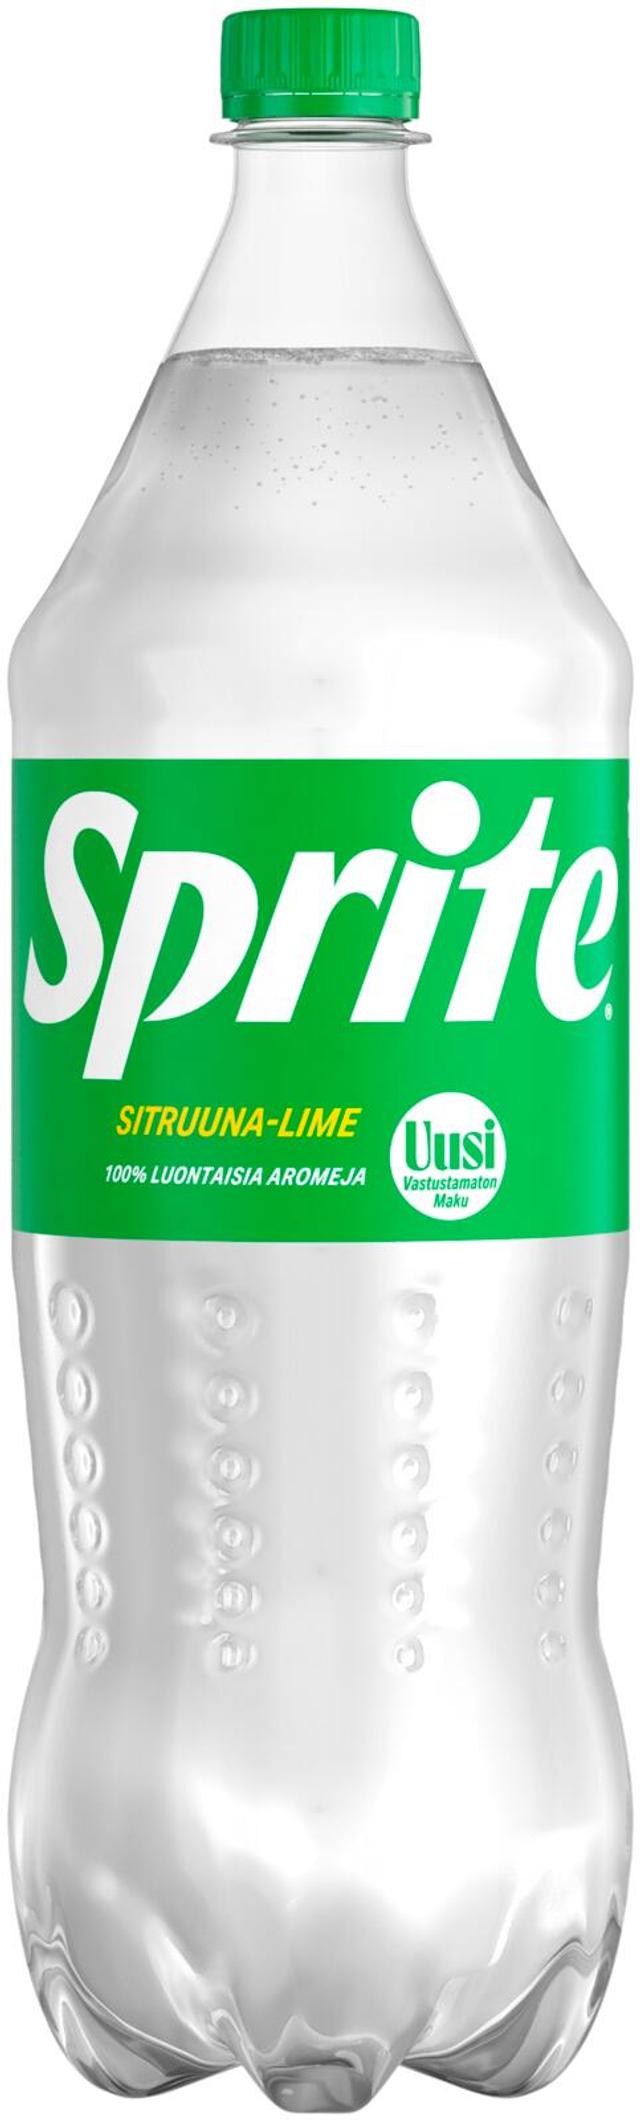 Sprite Sitruuna-Lime virvoitusjuoma muovipullo 1,5 L